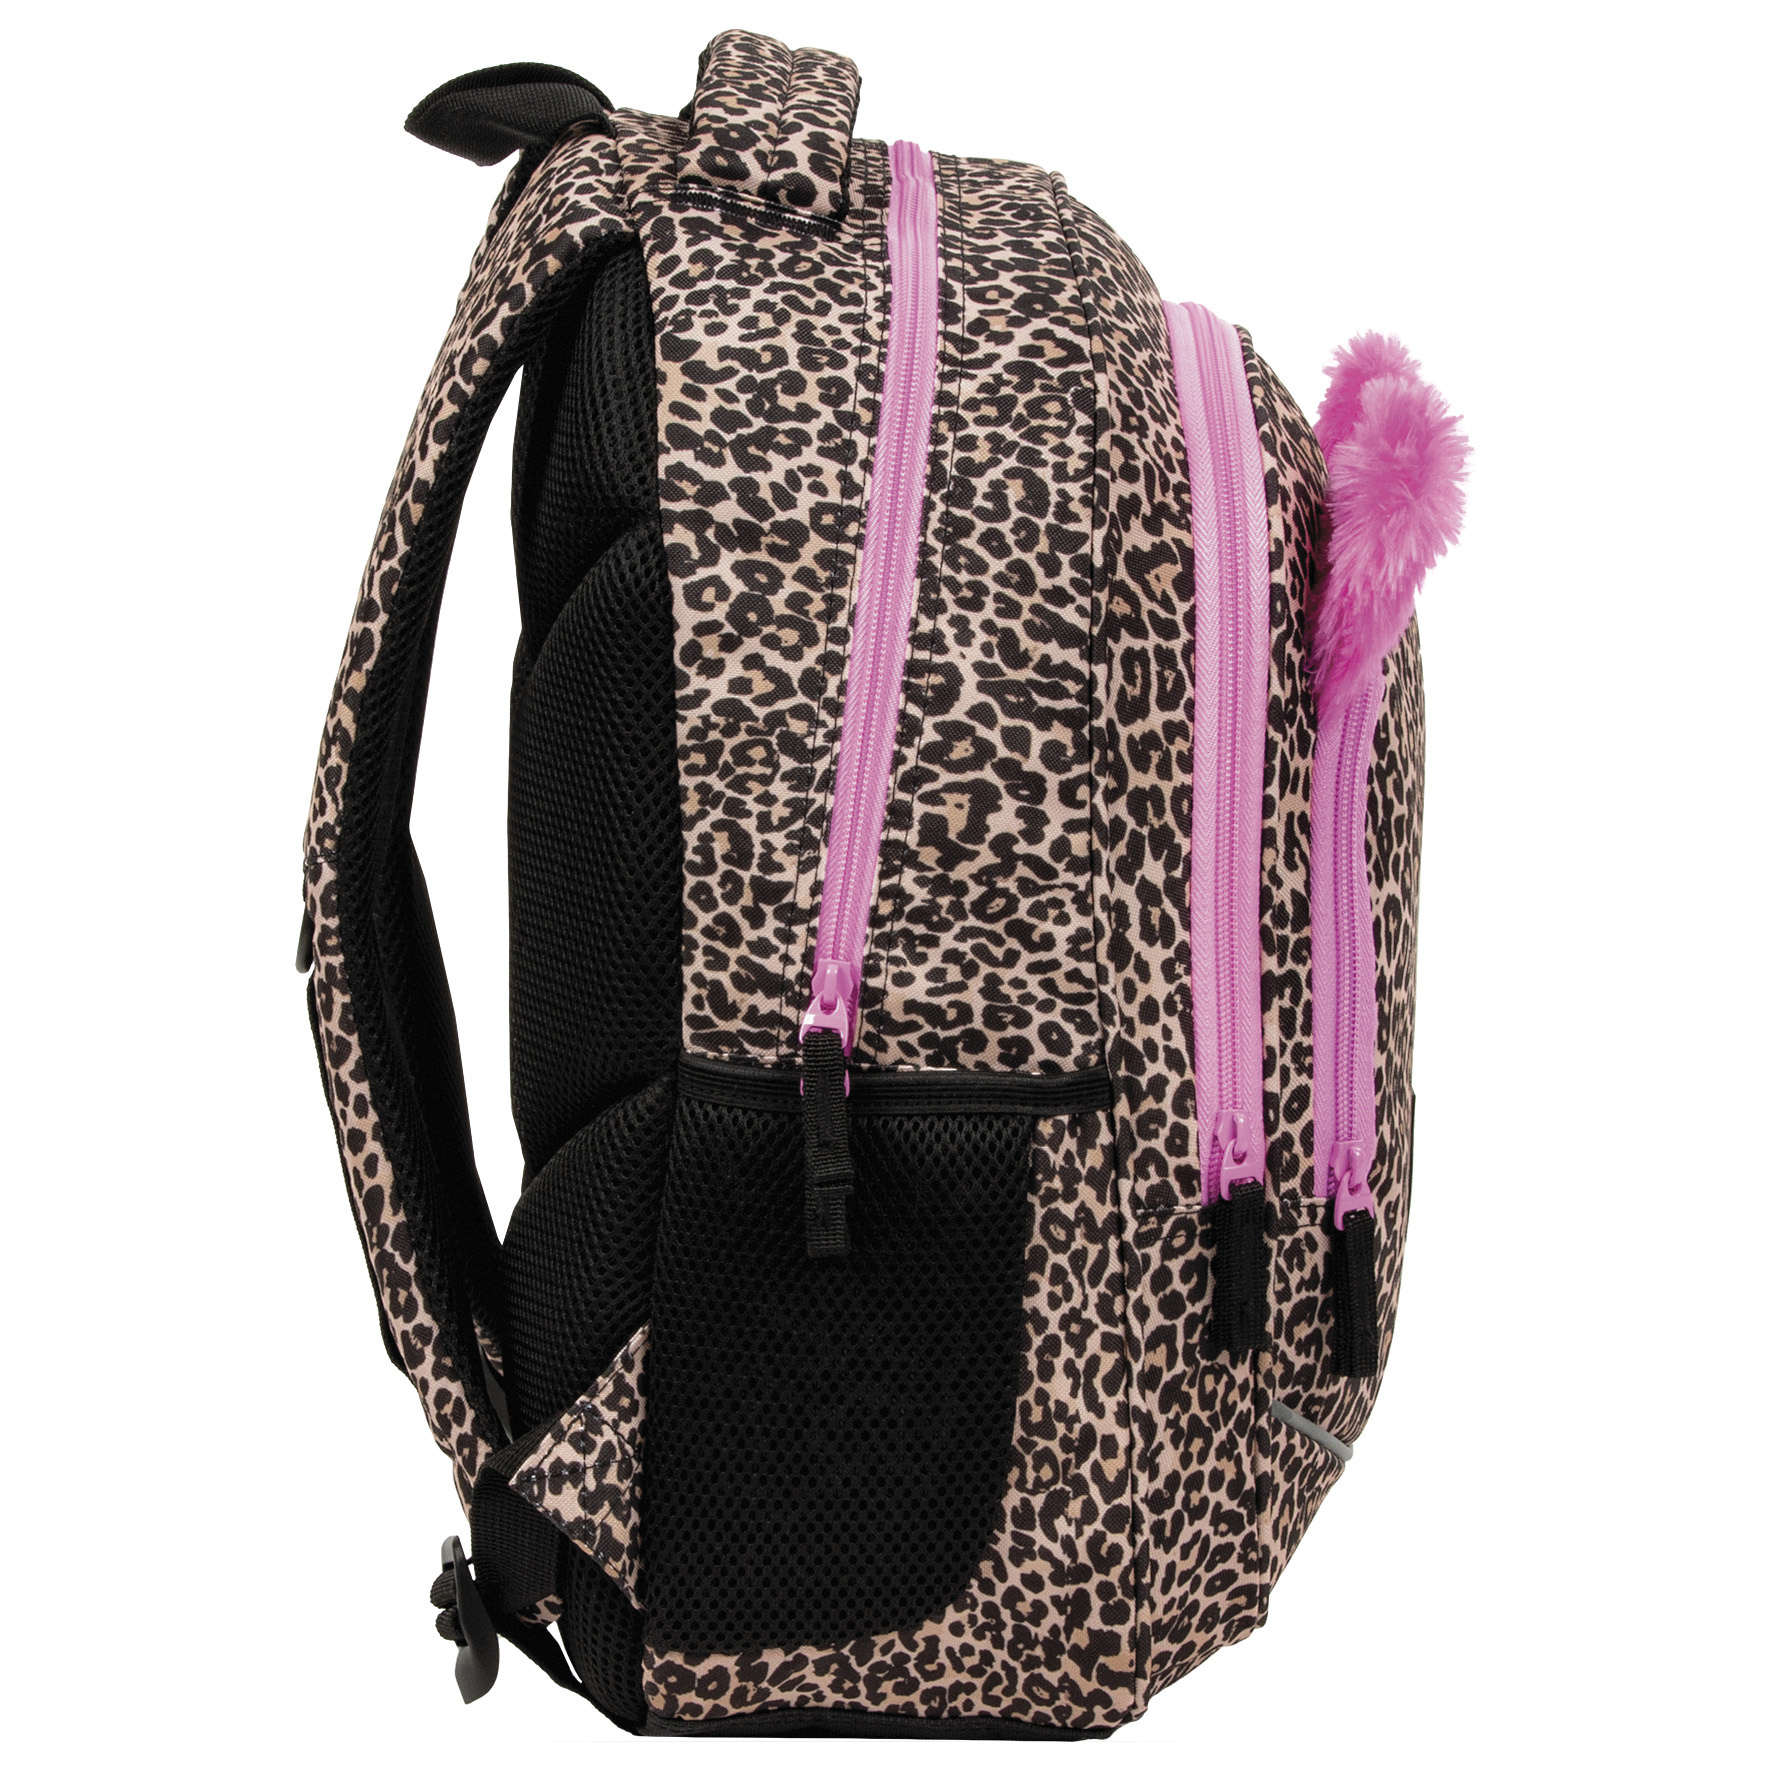 BackUP Backpack, Leopard - 42 x 30 x 15 cm - Polyester